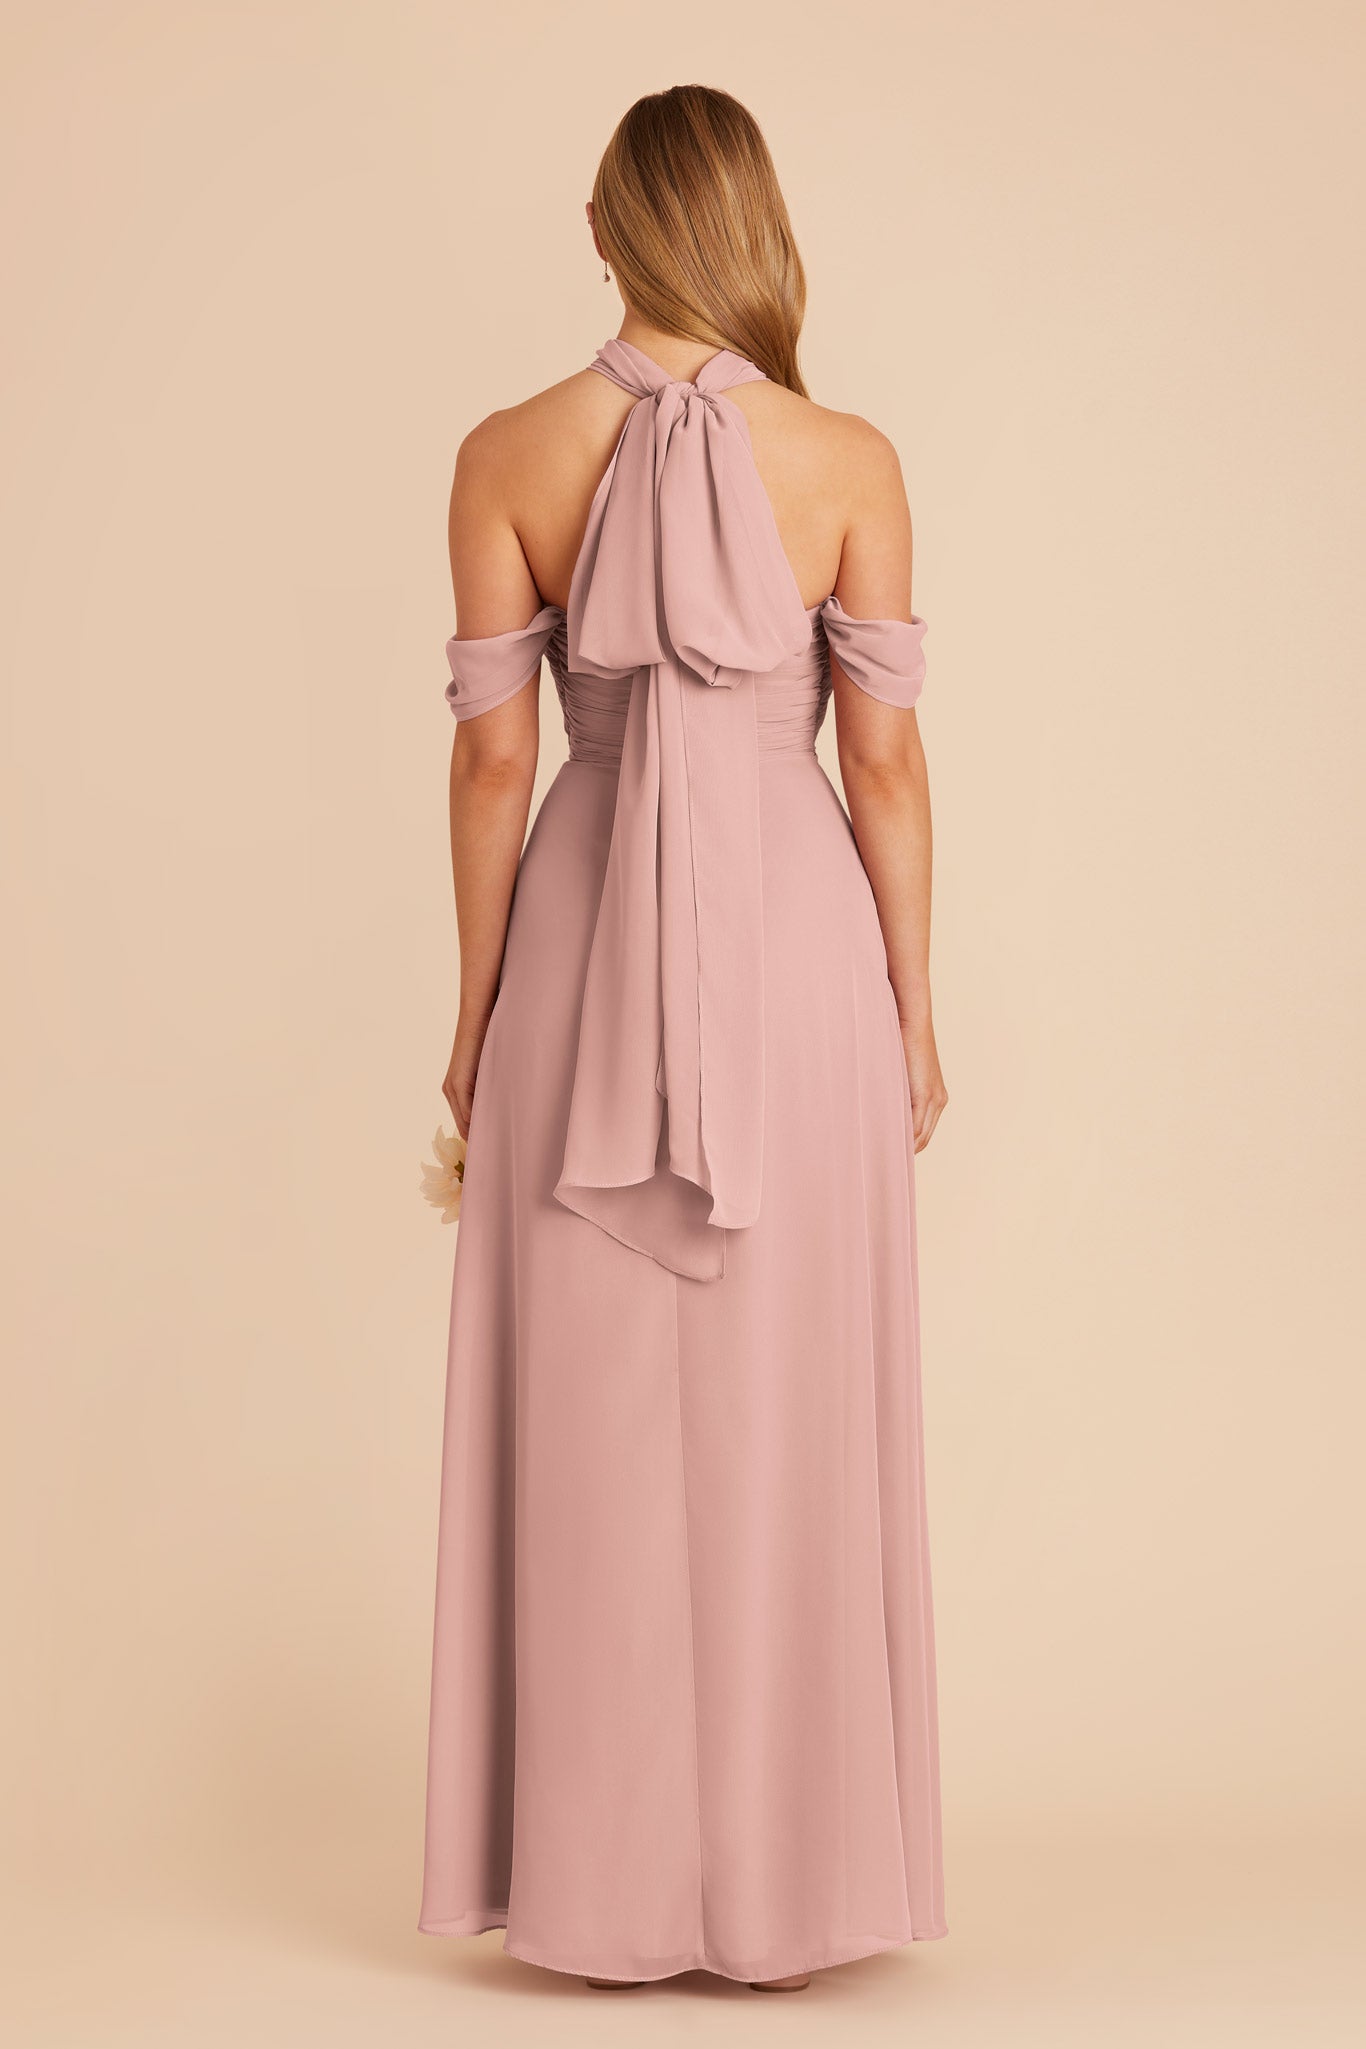 English Rose Cara Chiffon Dress by Birdy Grey